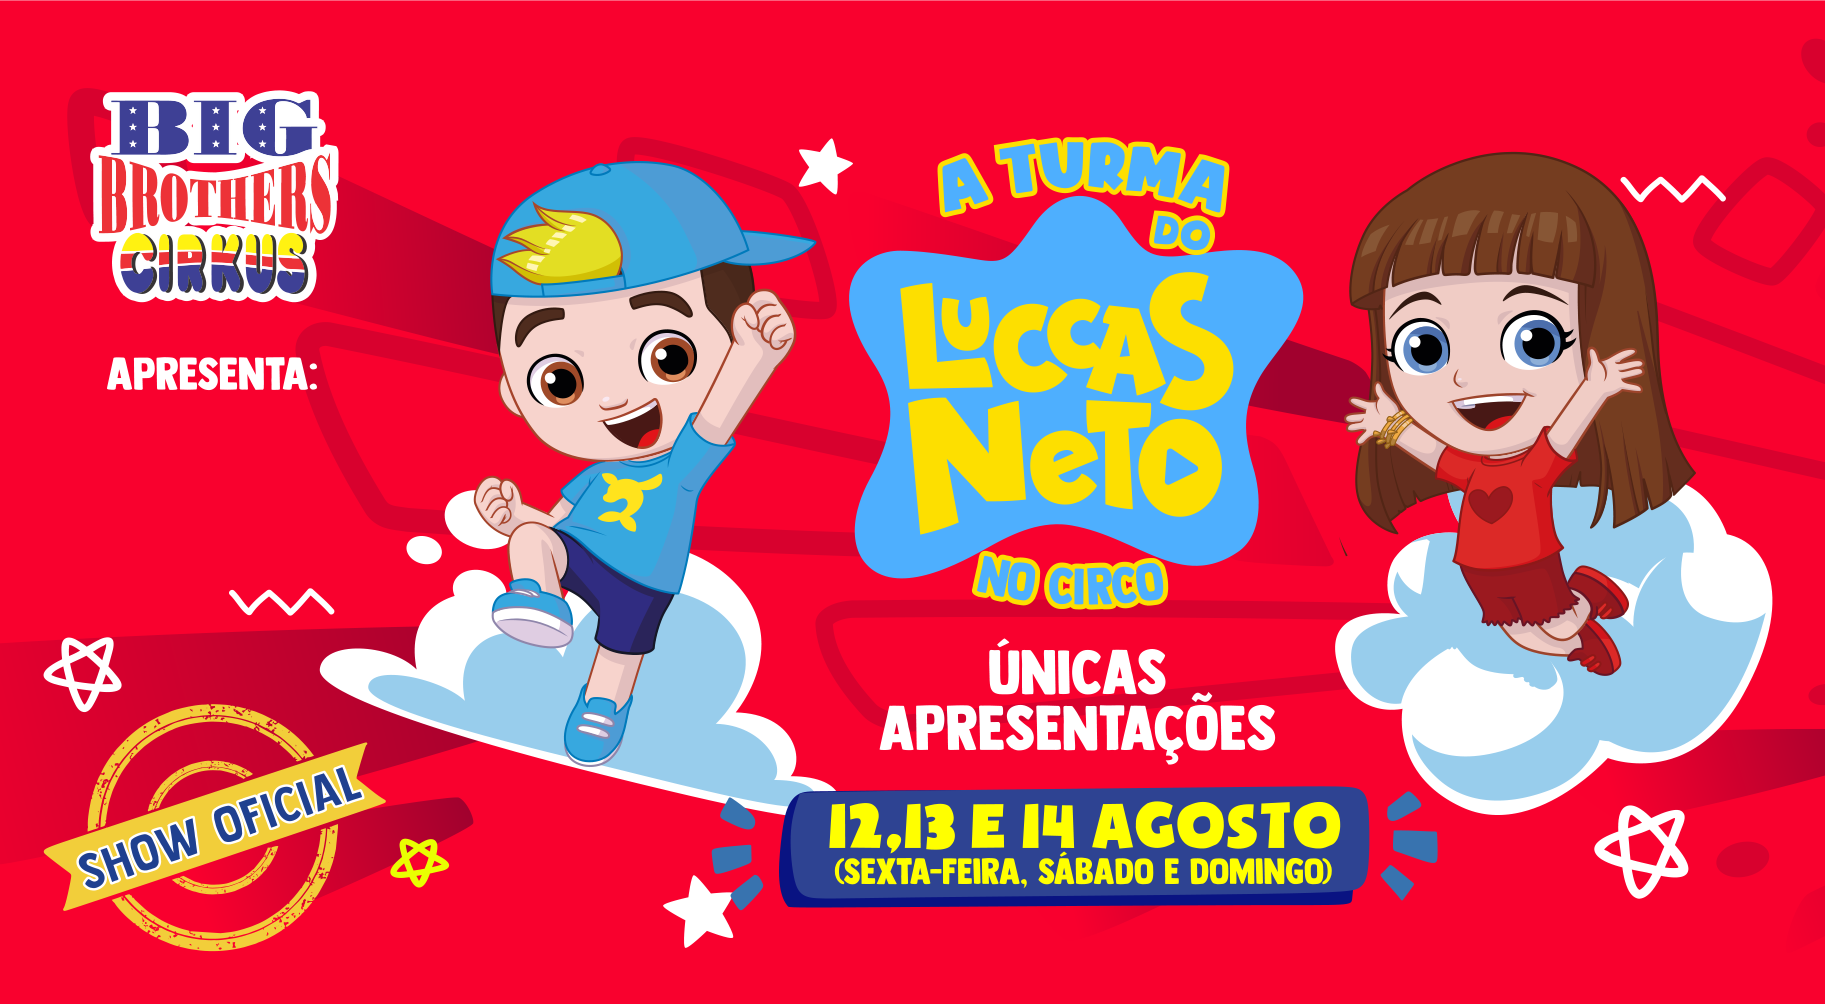 A Turma do Luccas Neto - Big Brothers Cirkus